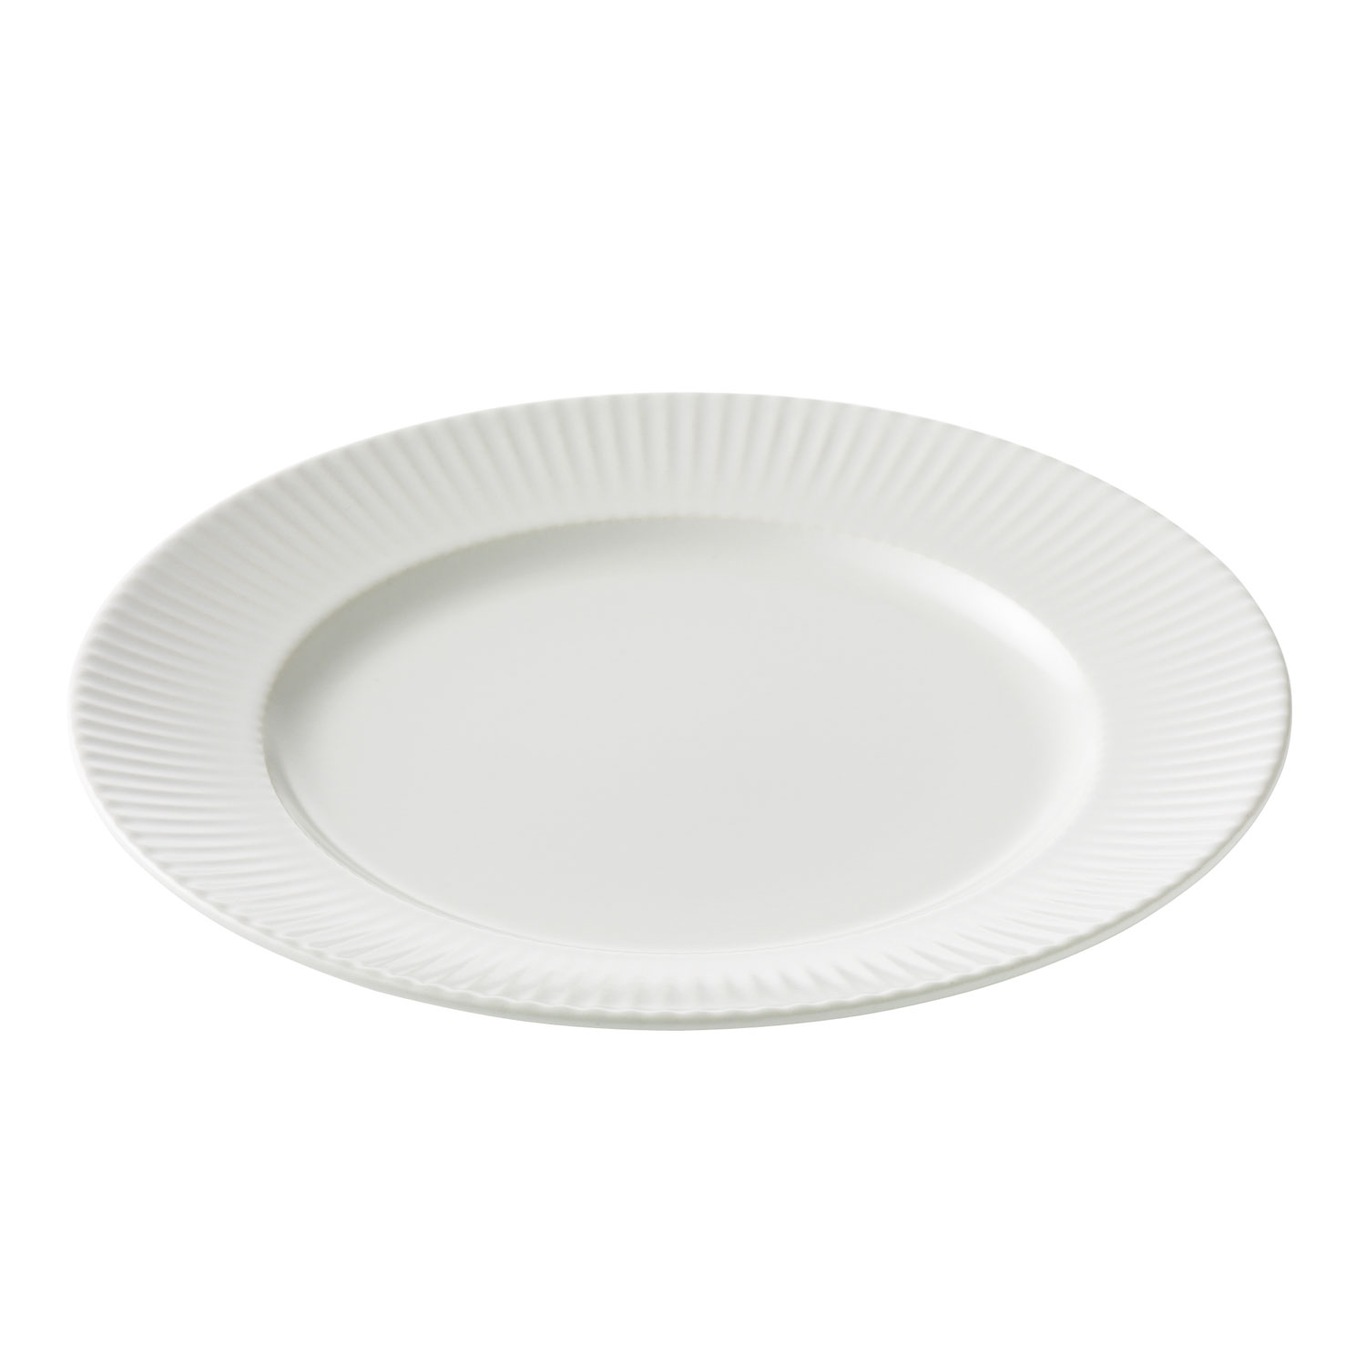 Groovy Breakfast Plate 21 cm, White